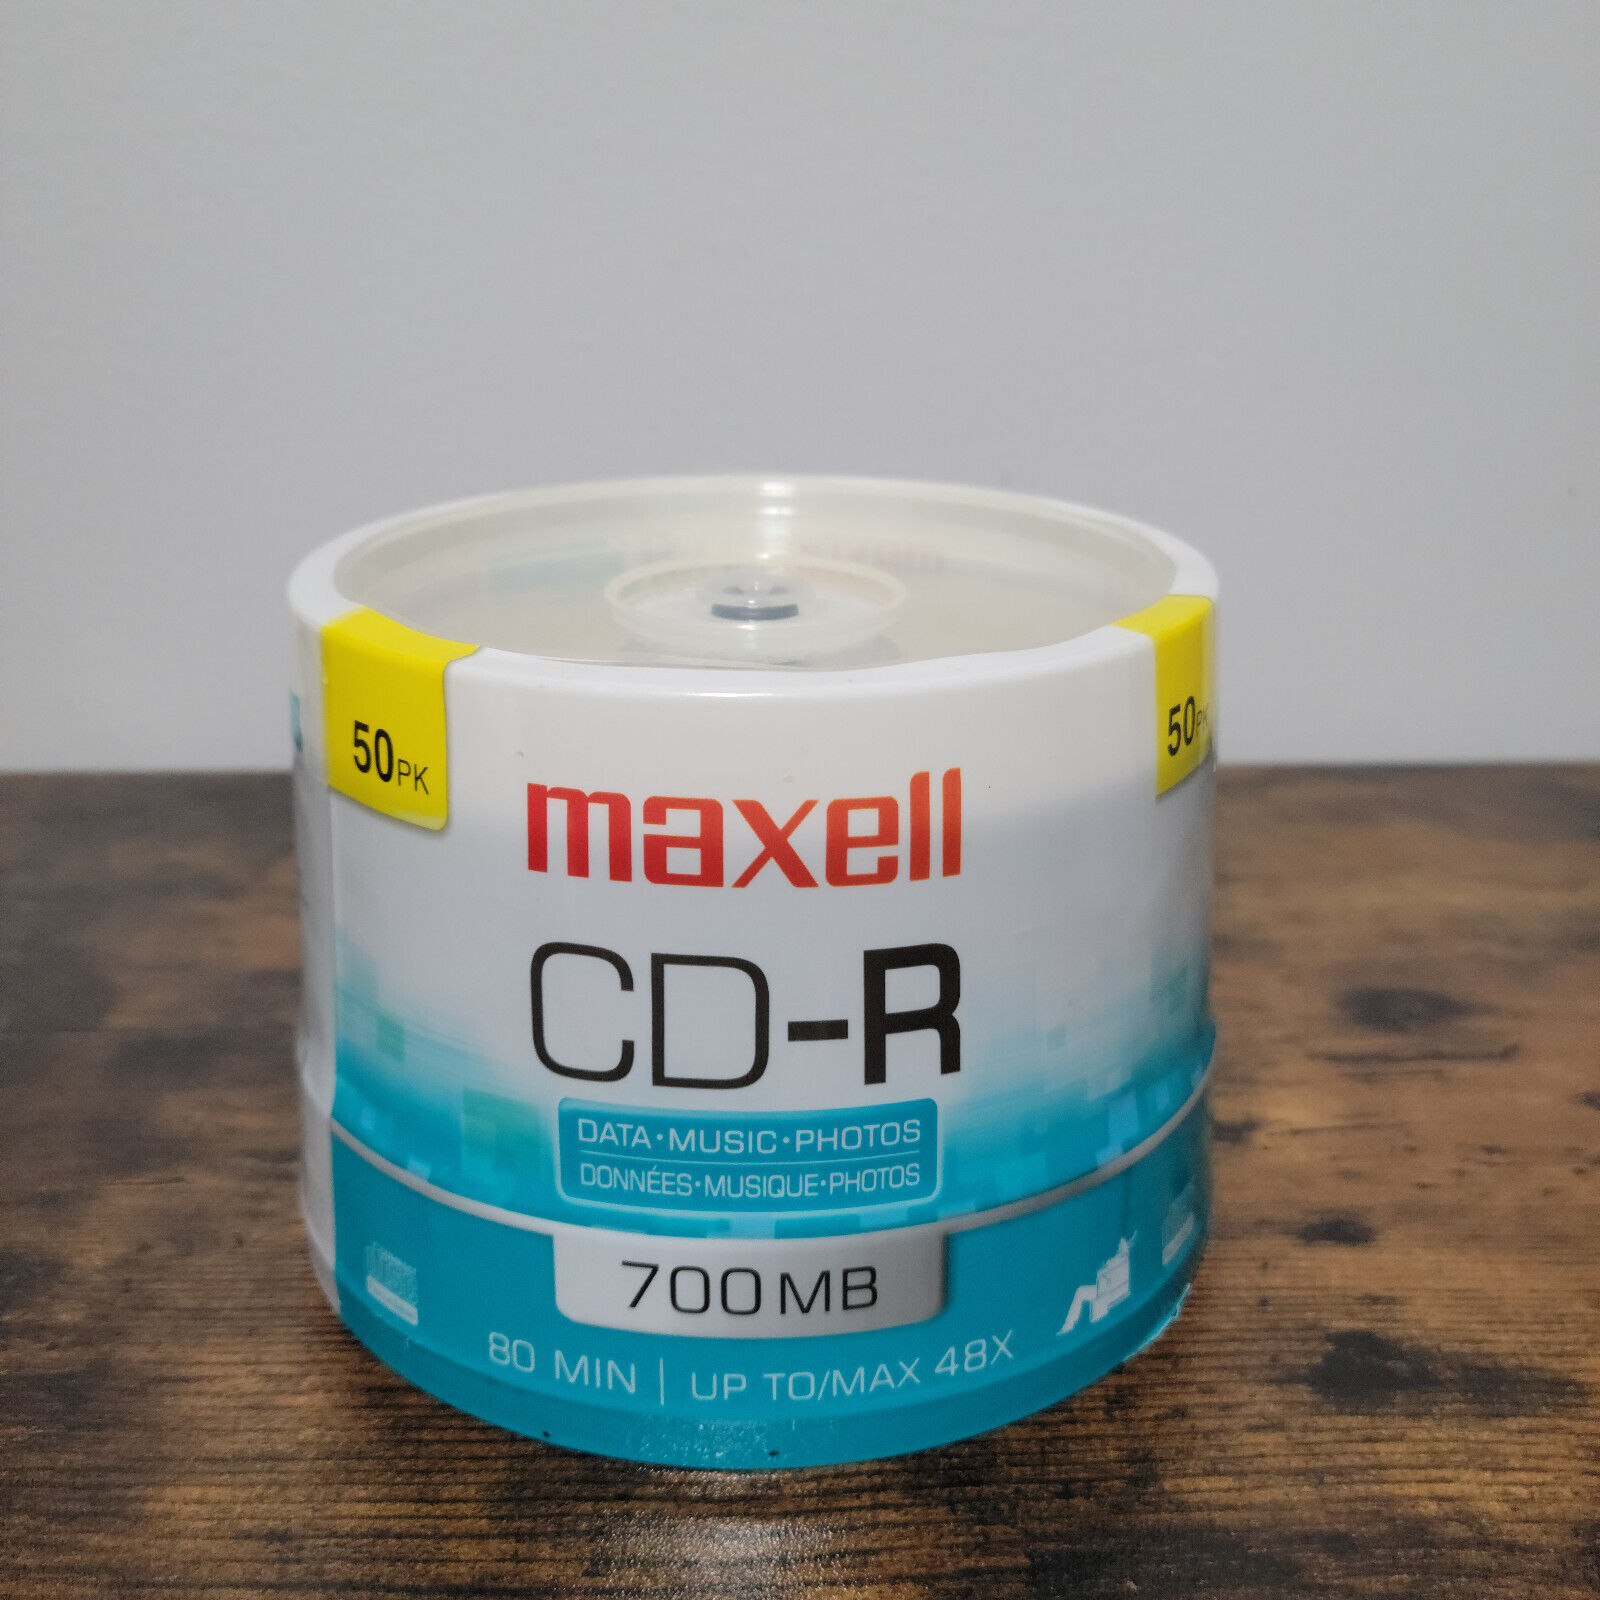 Maxwell CD-R 48X 700MB 80 Minutes Data Blank CD/DVD Media 50 Pack